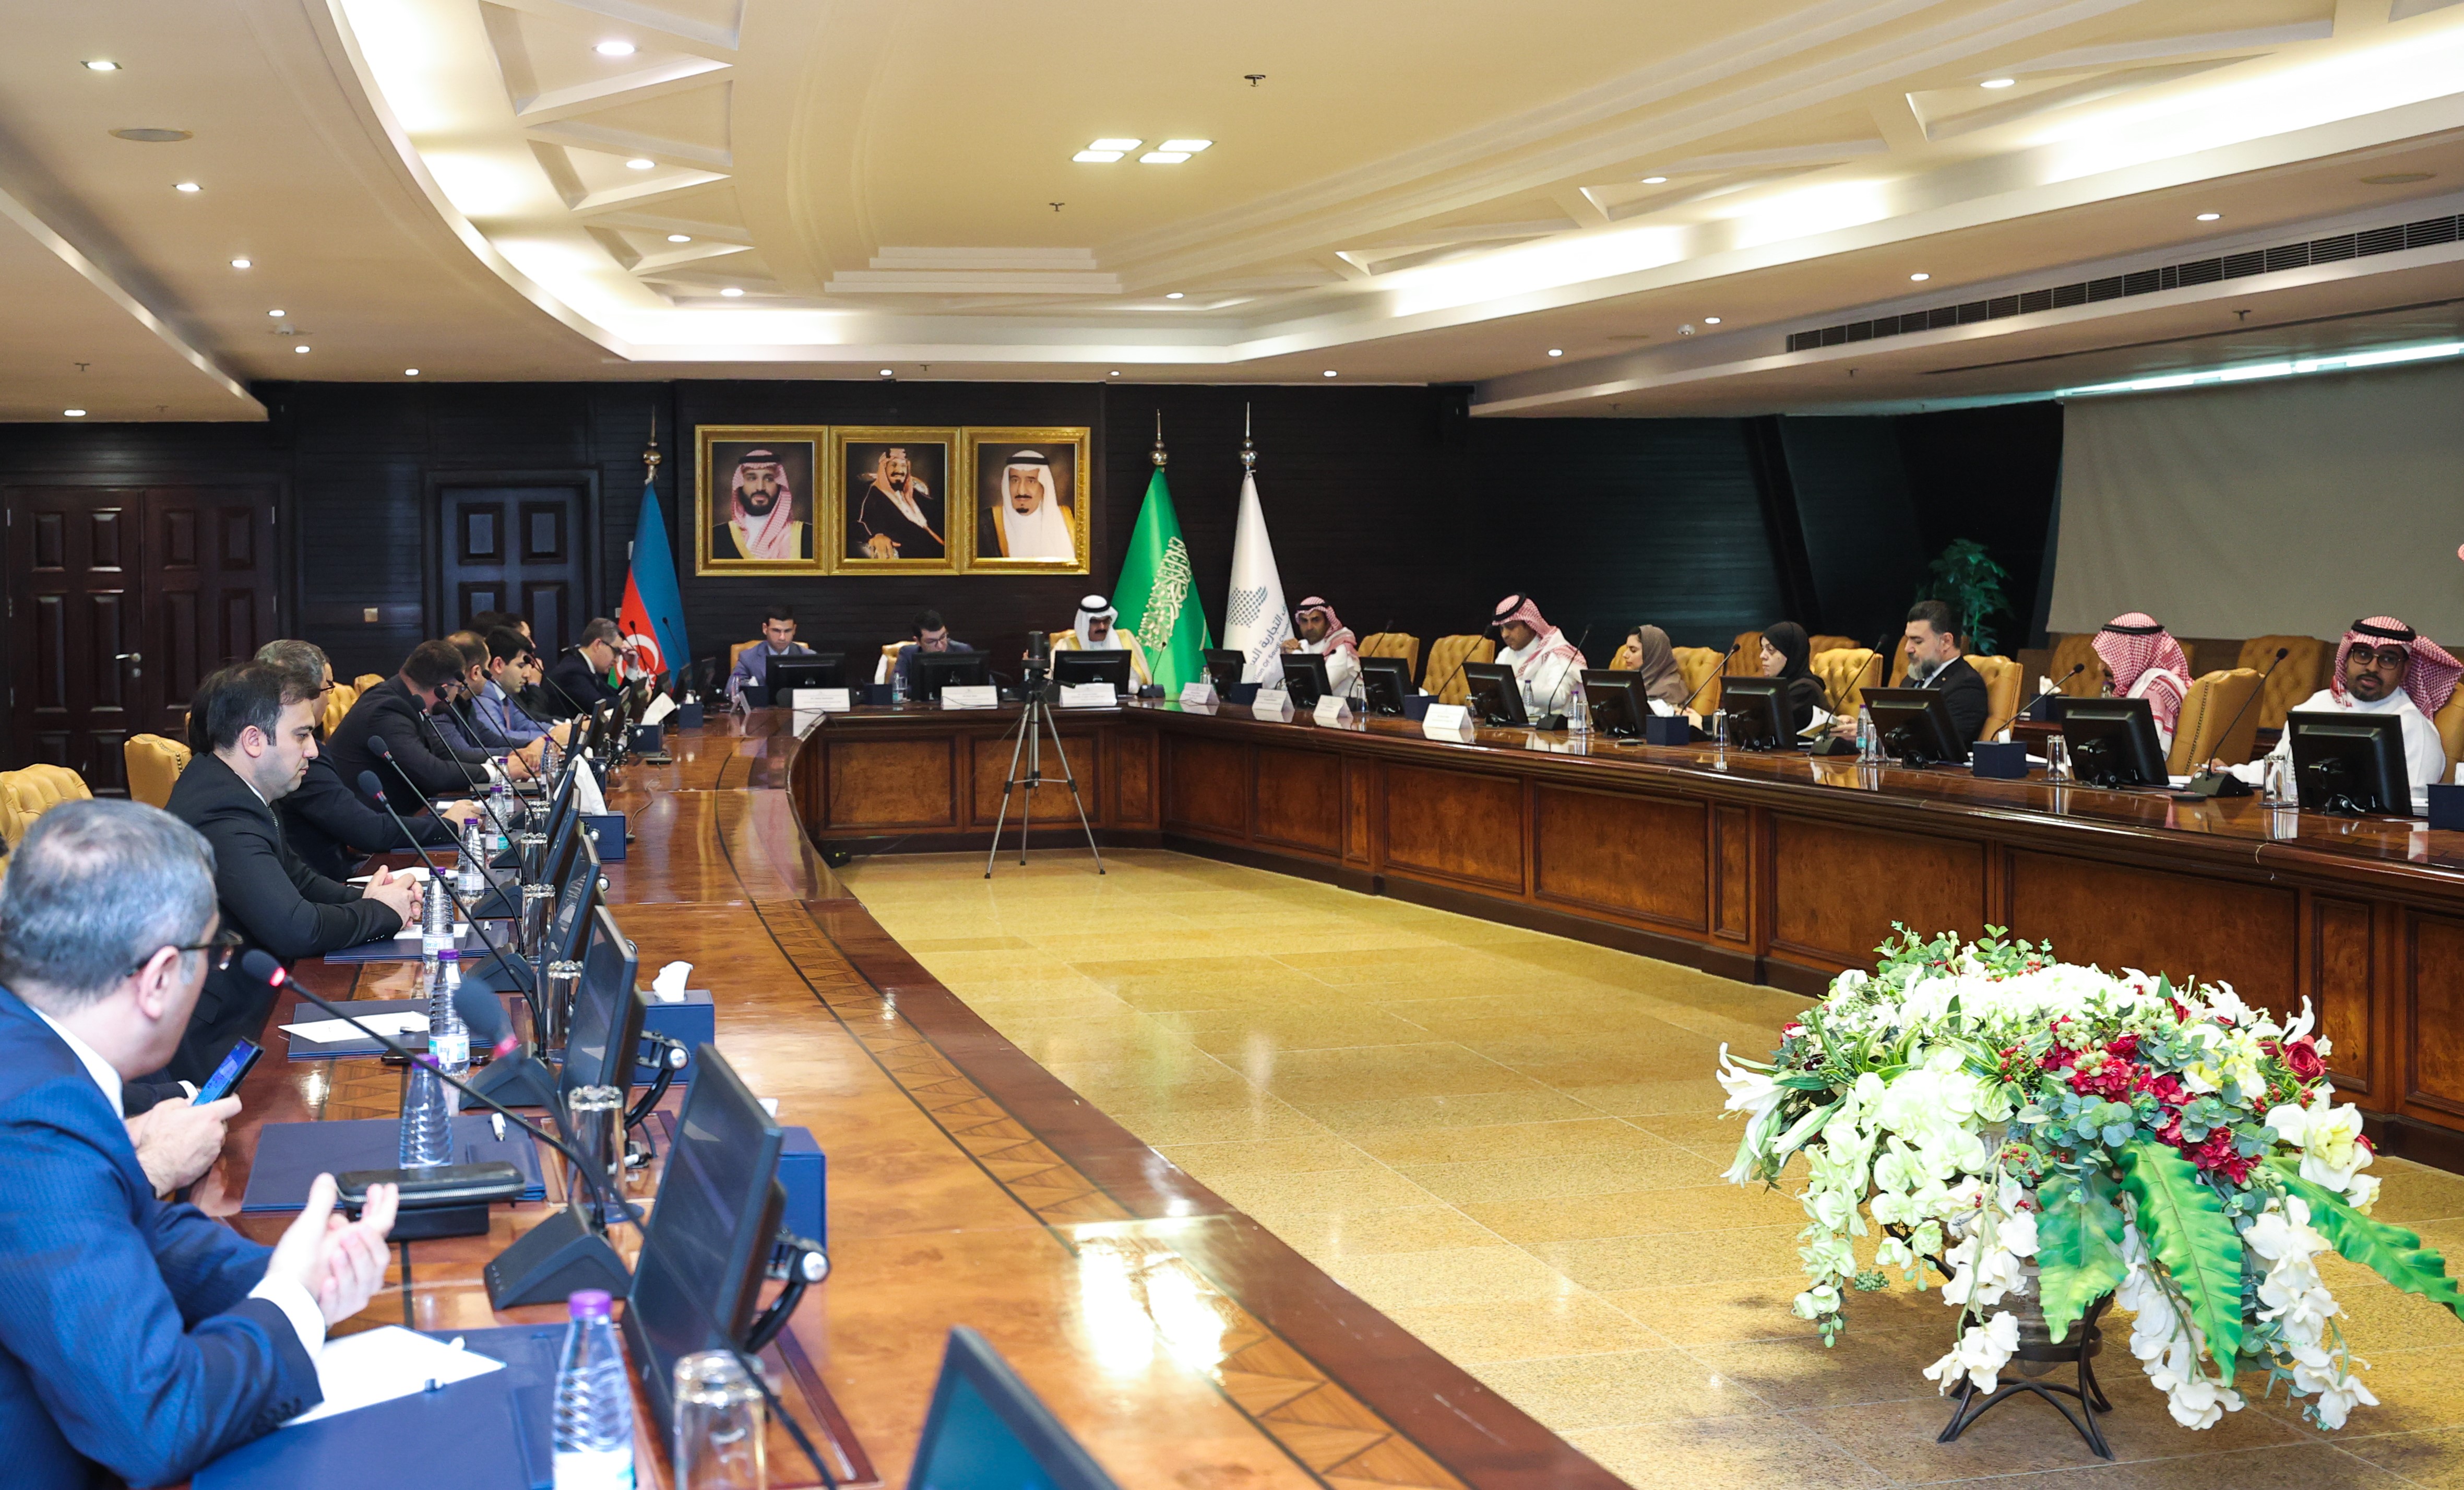 The representatives of KOBİA visited Saudia Arabia